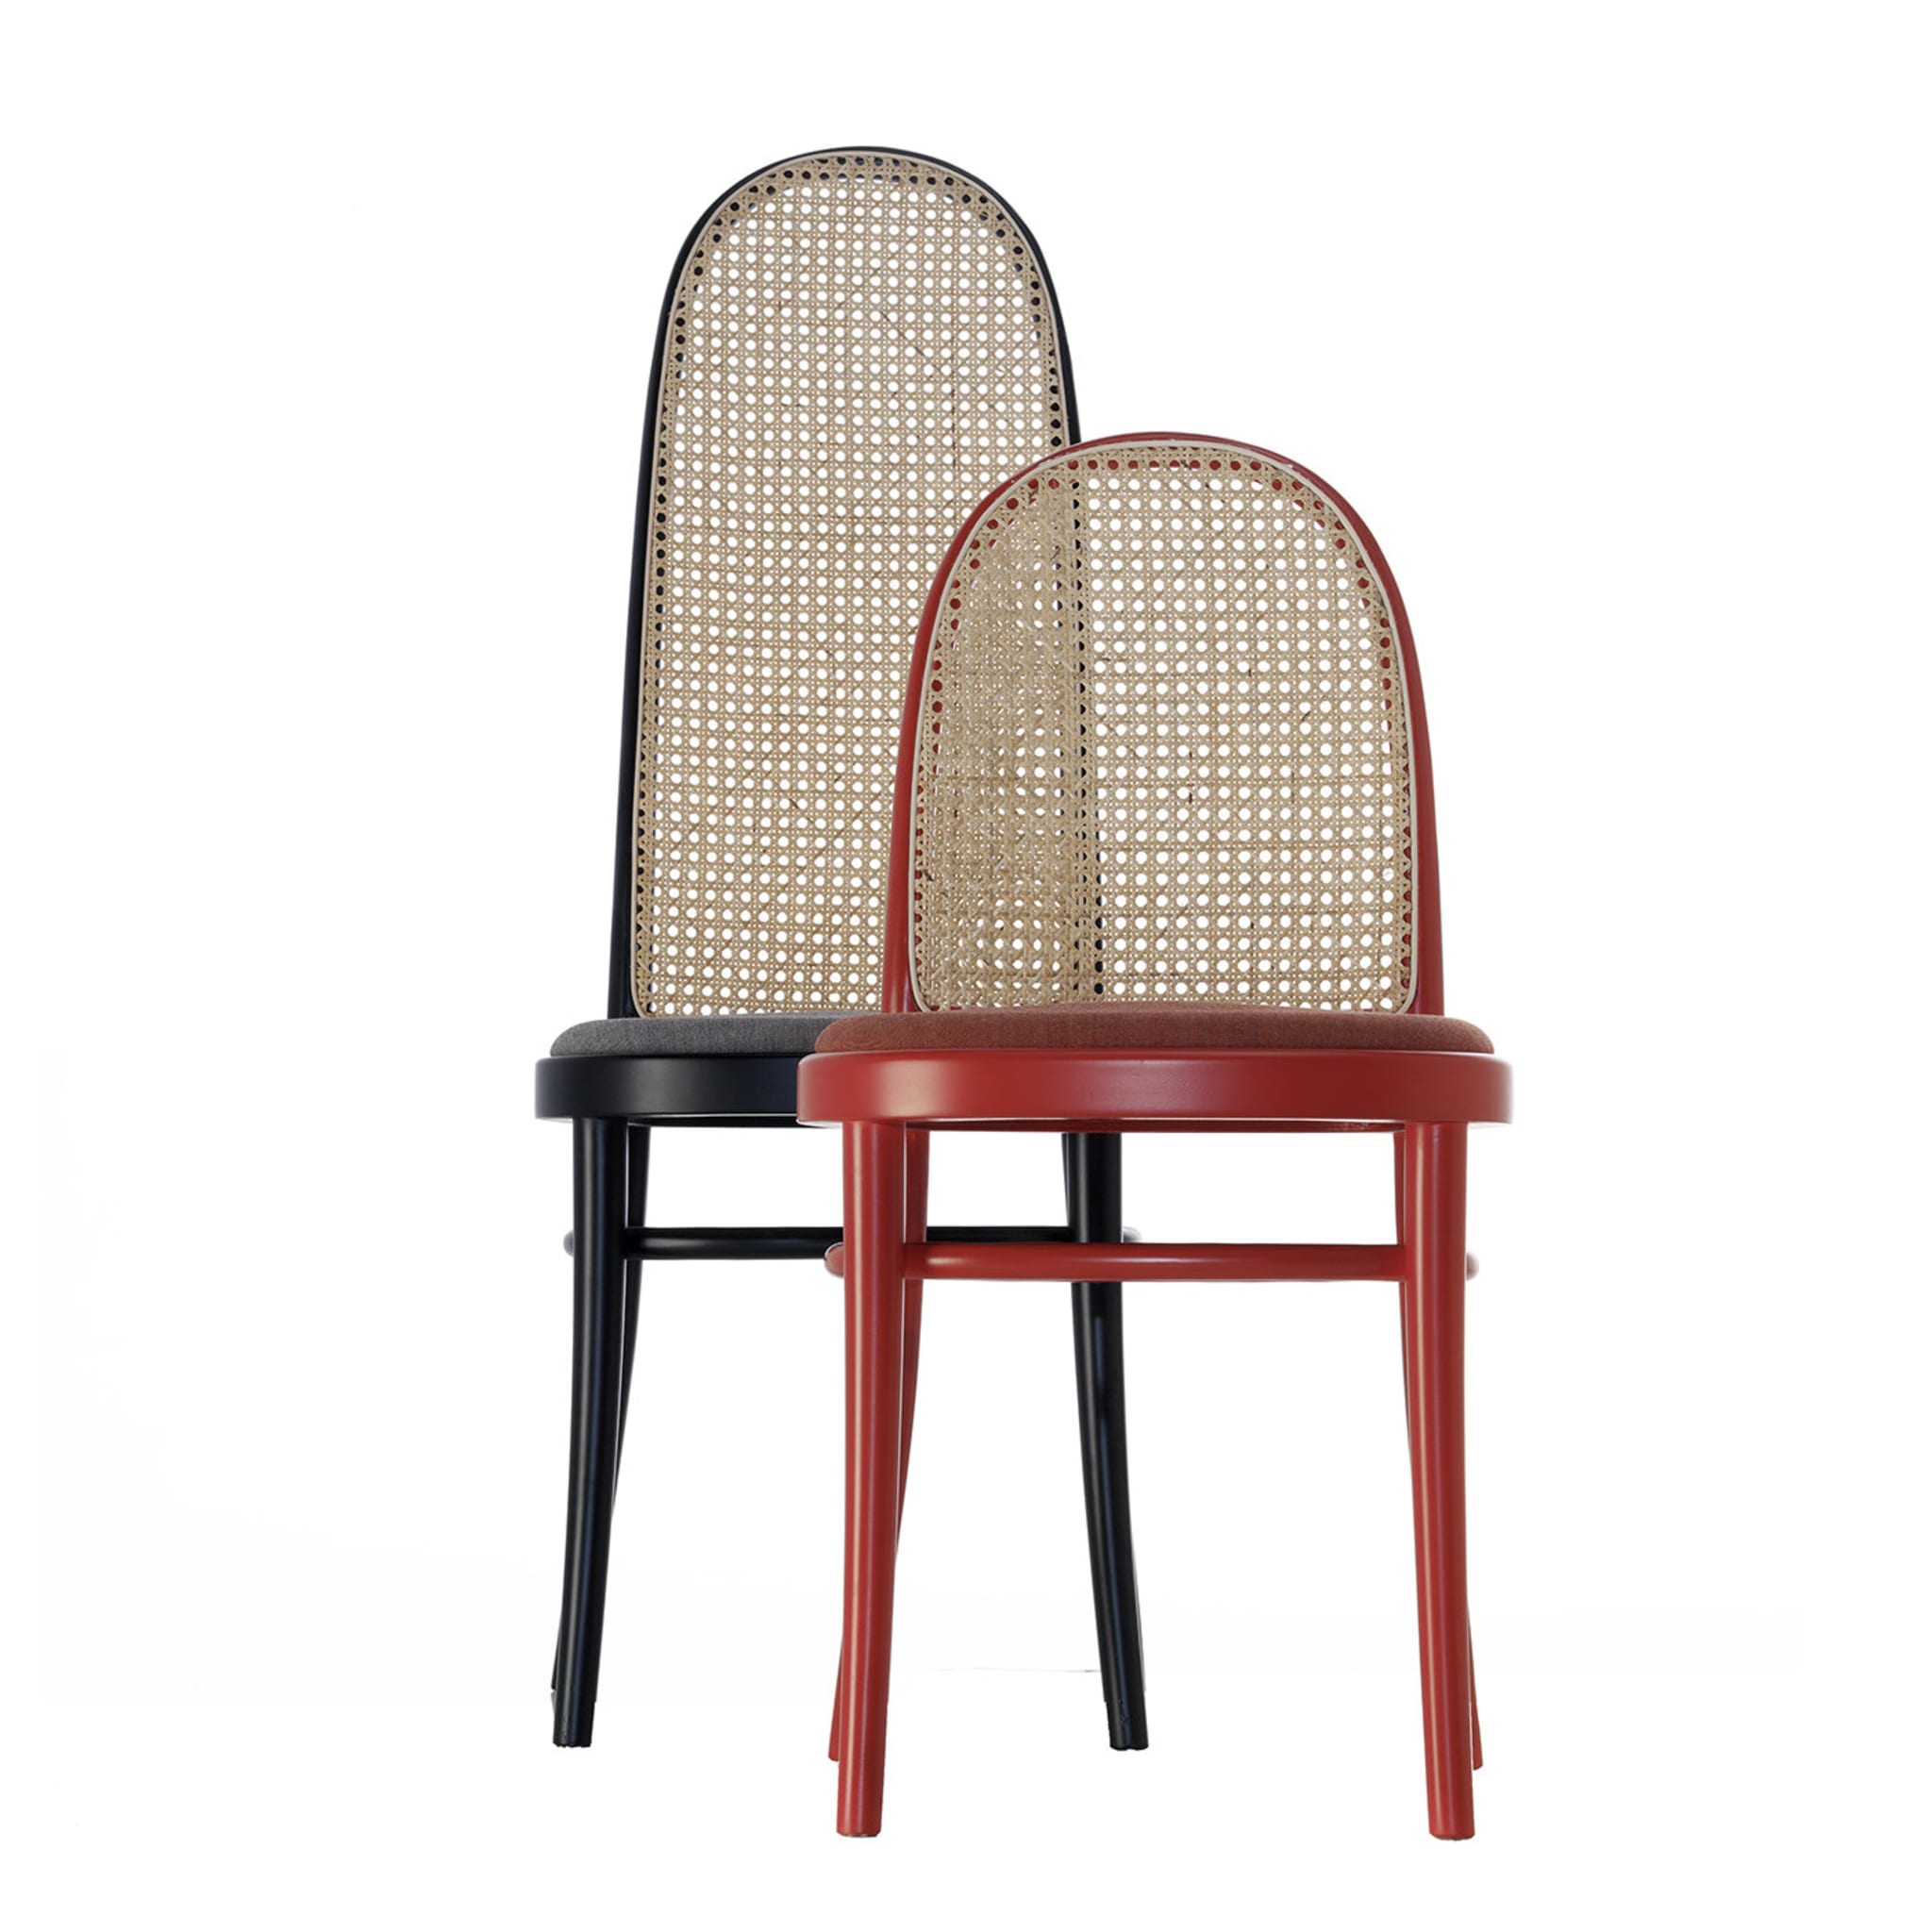 Morris Red Low Chair by GamFratesi - Alternative view 3